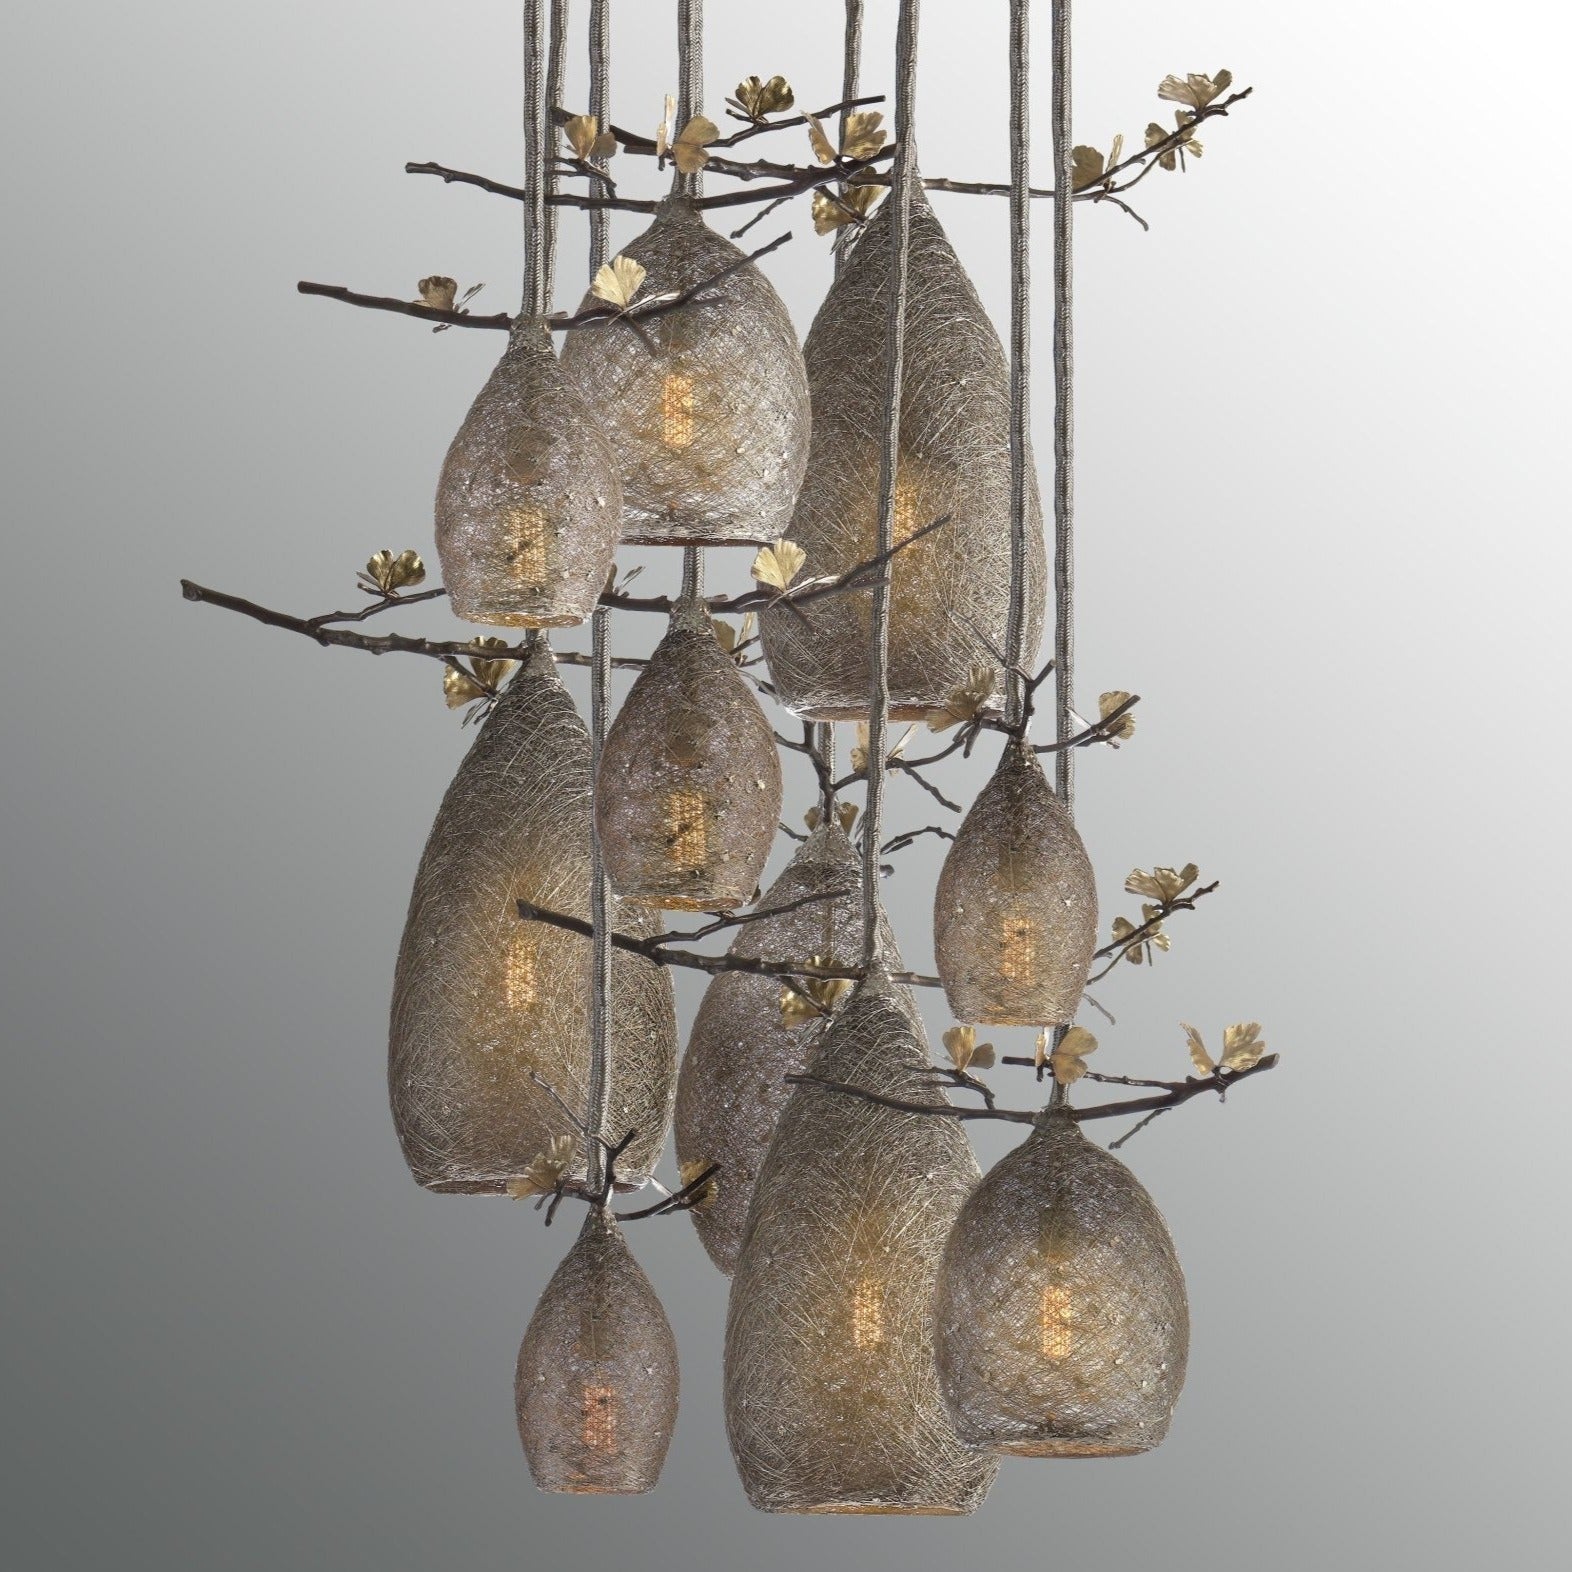 Michael Aram Cocoon Pendant Lamp